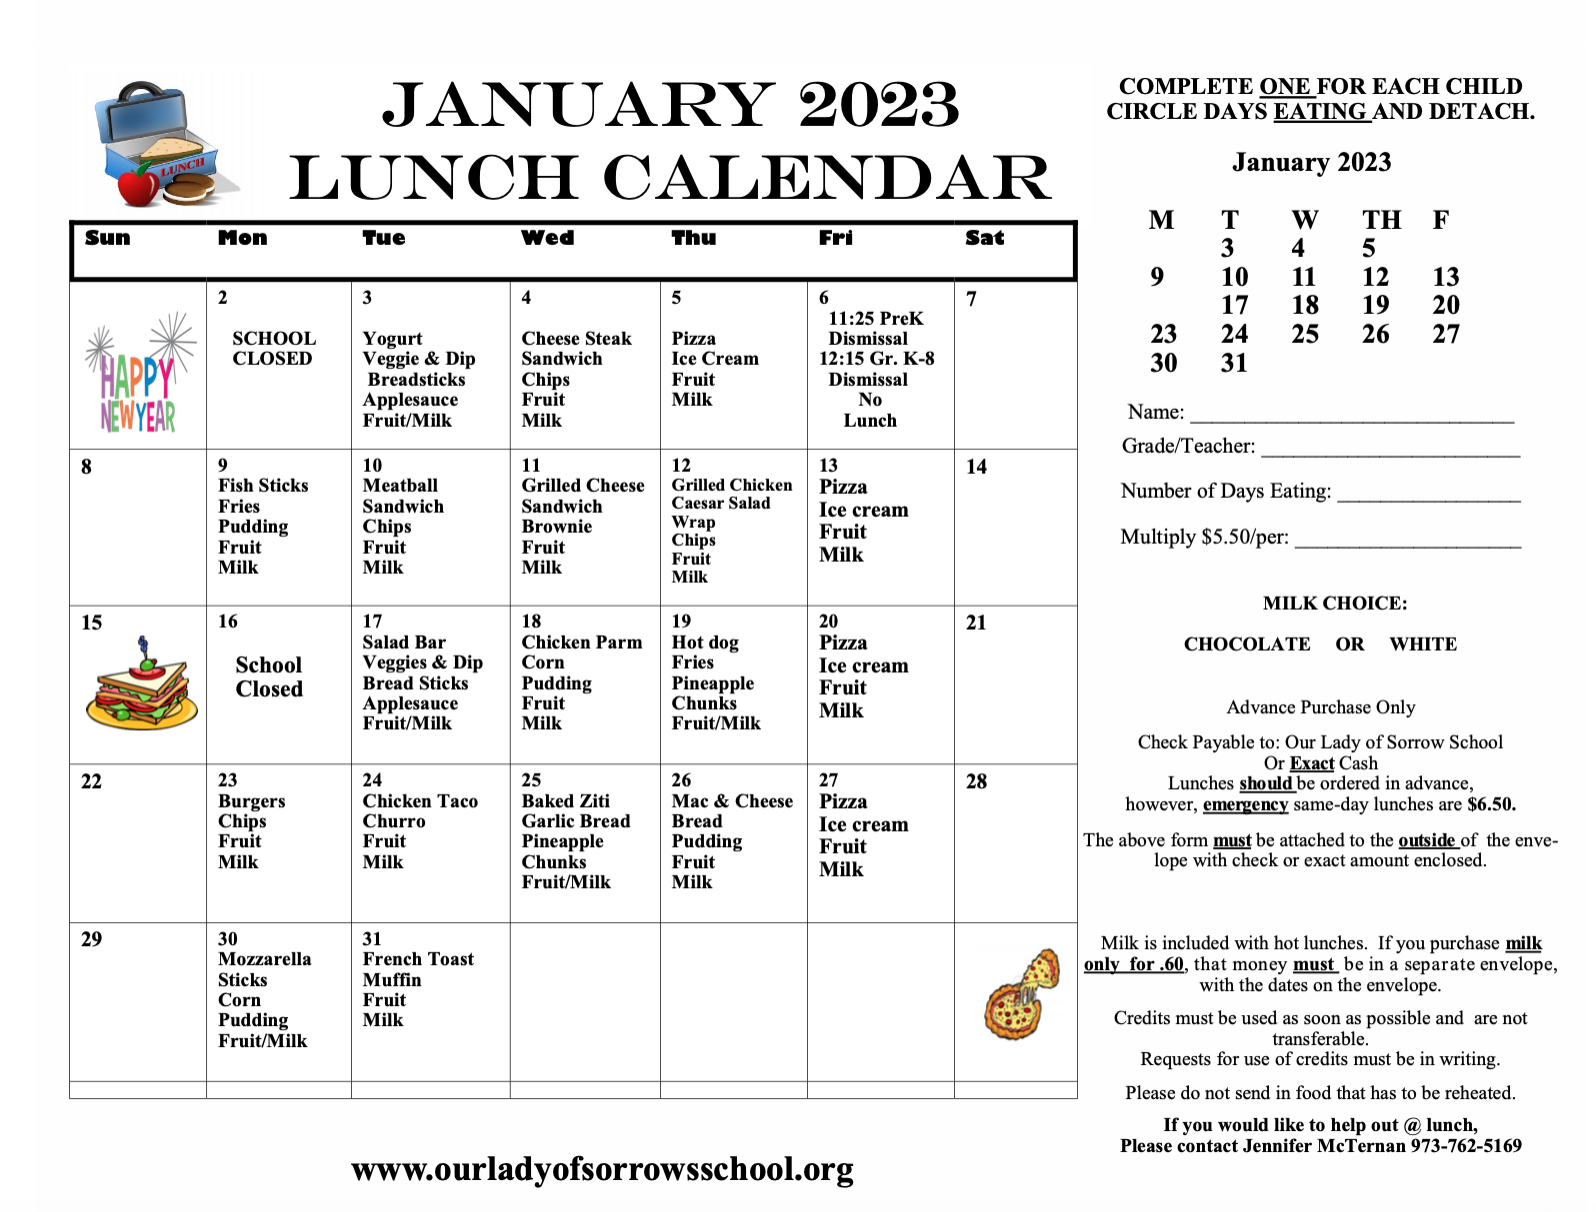 school-and-lunch-calendar-our-lady-of-sorrows-school